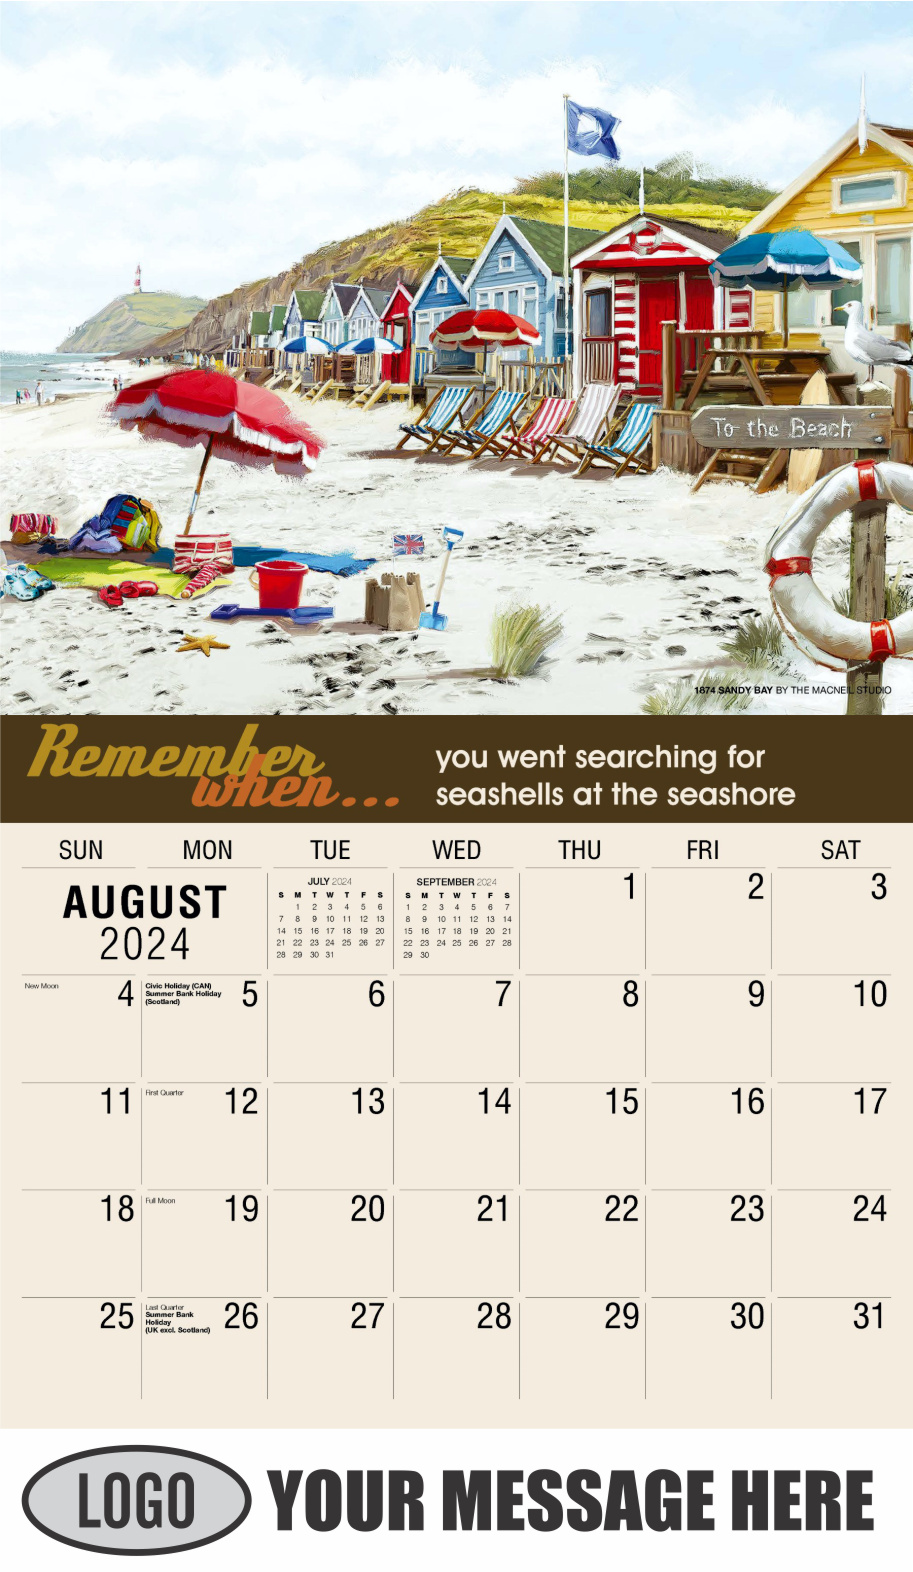 Remember When 2024 Business Advertising Calendar - August